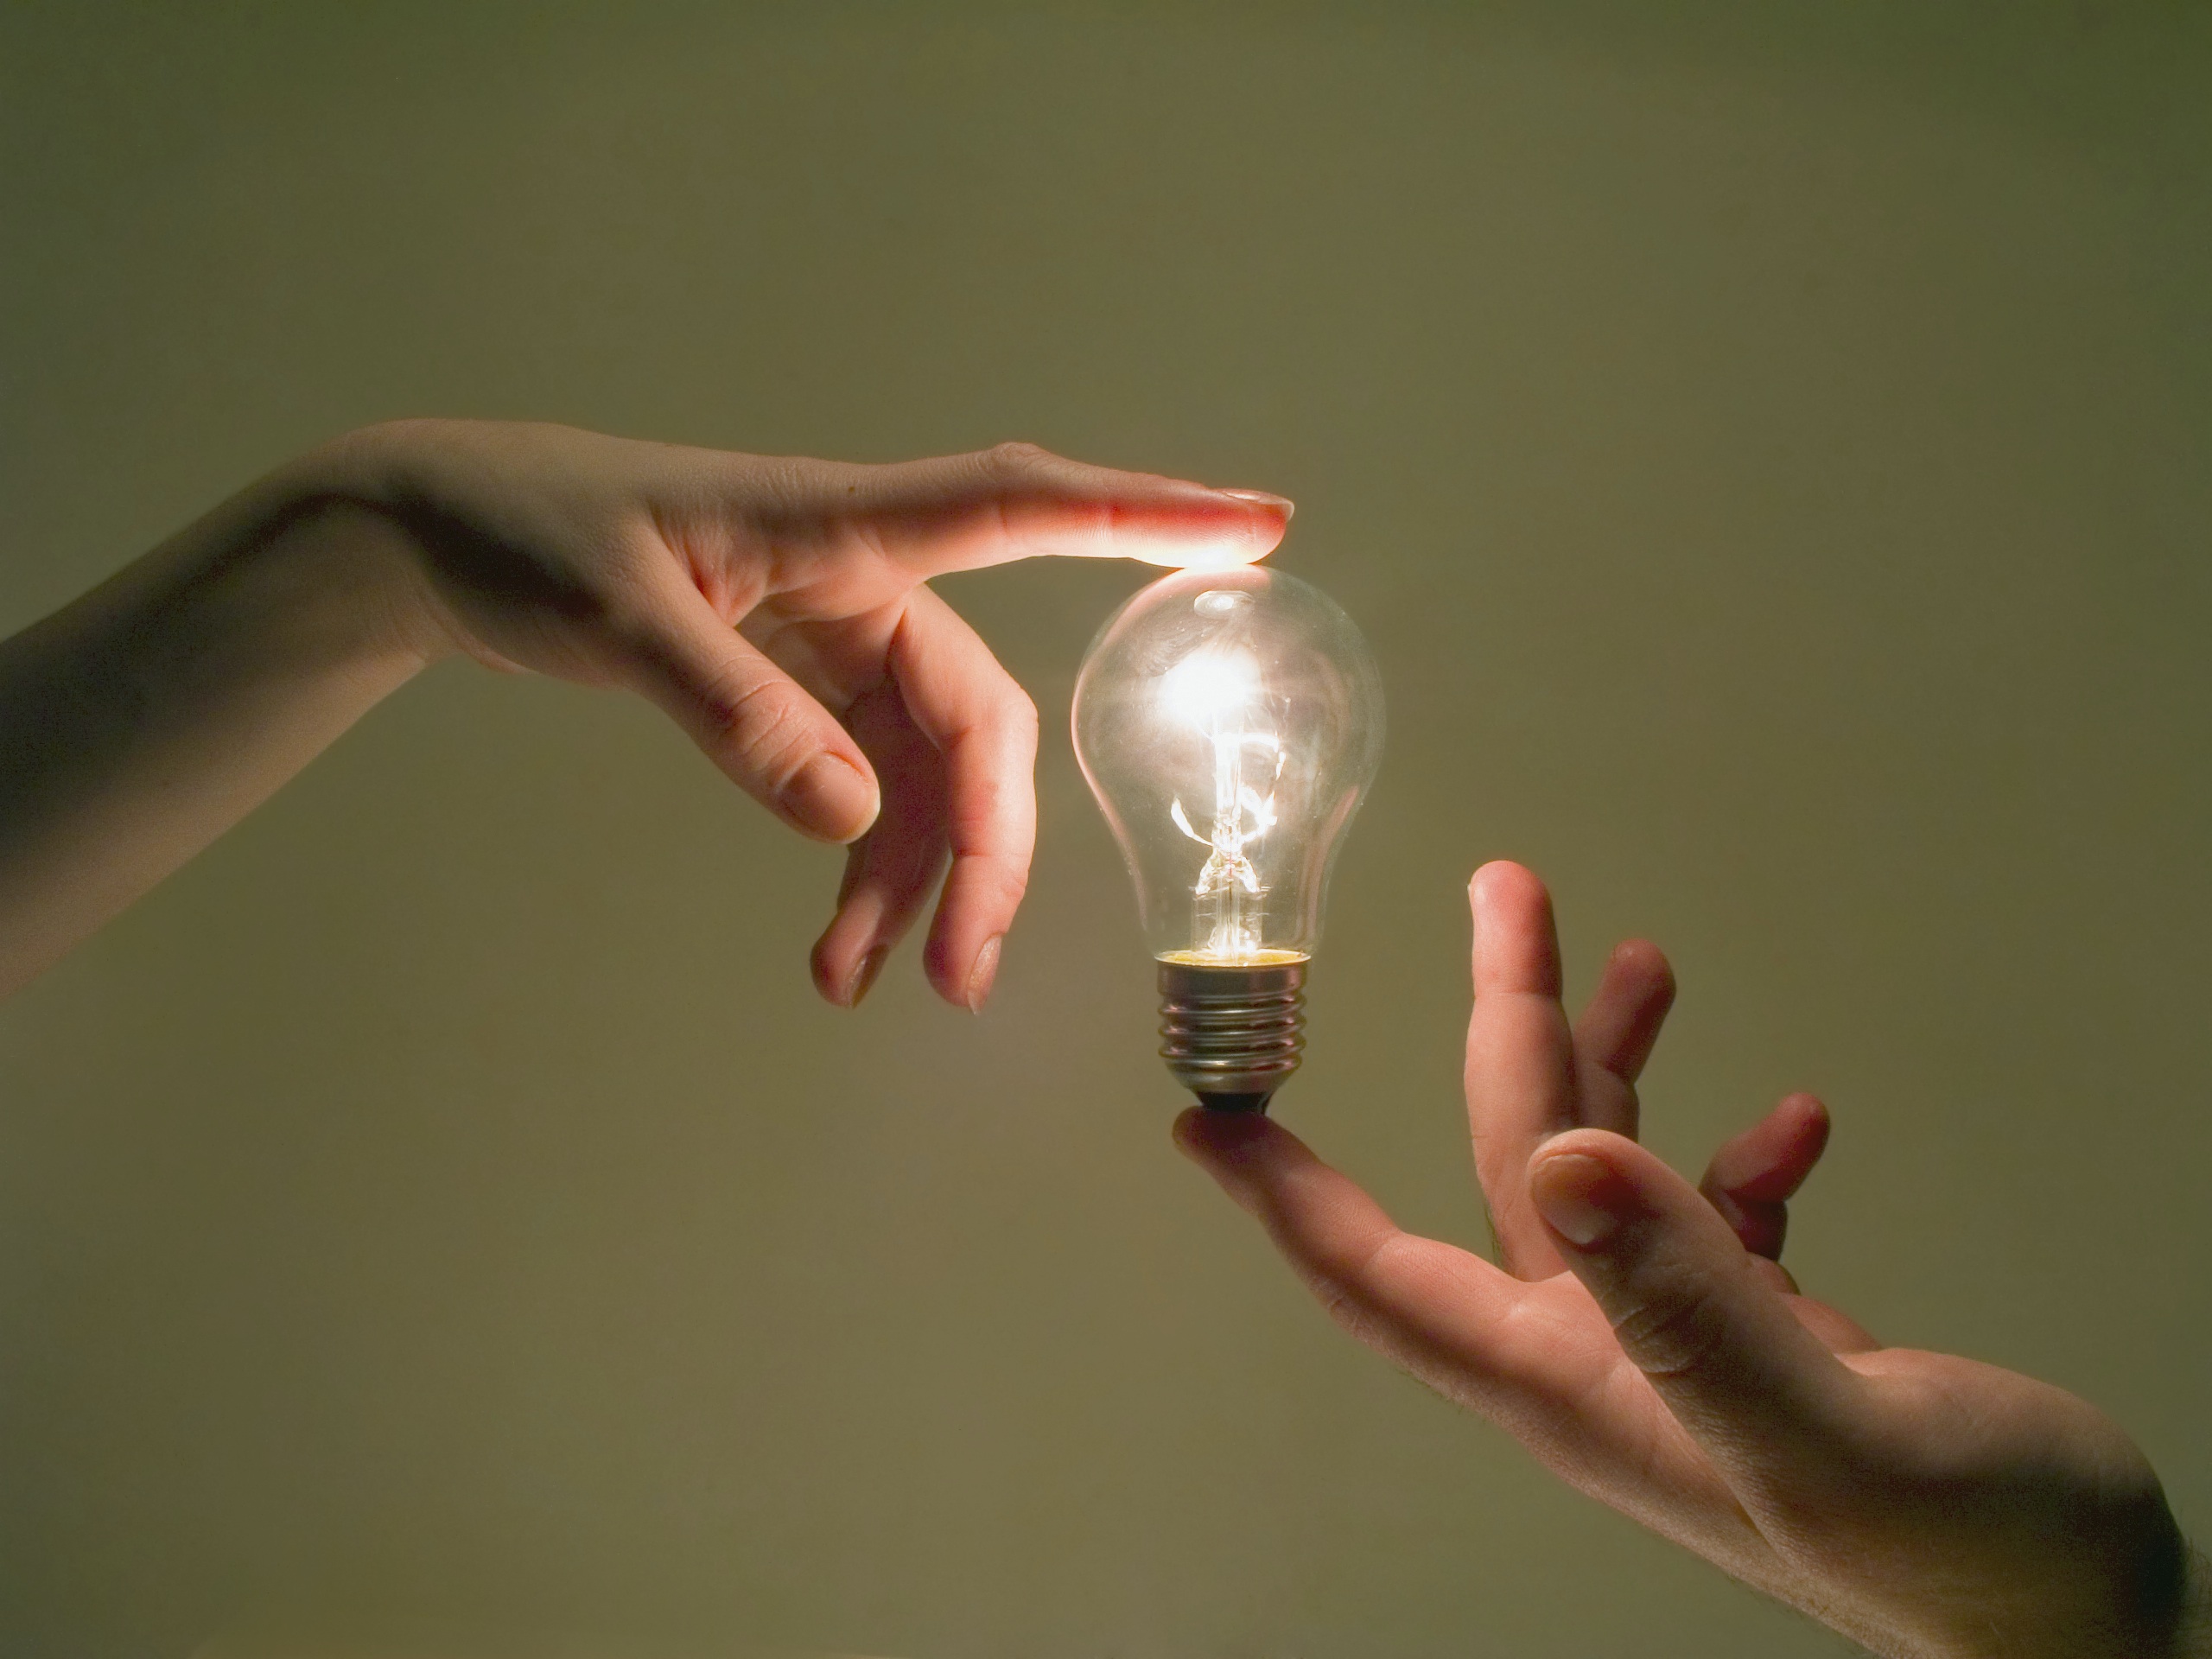 Lightbulb held between the index fingers of two hands